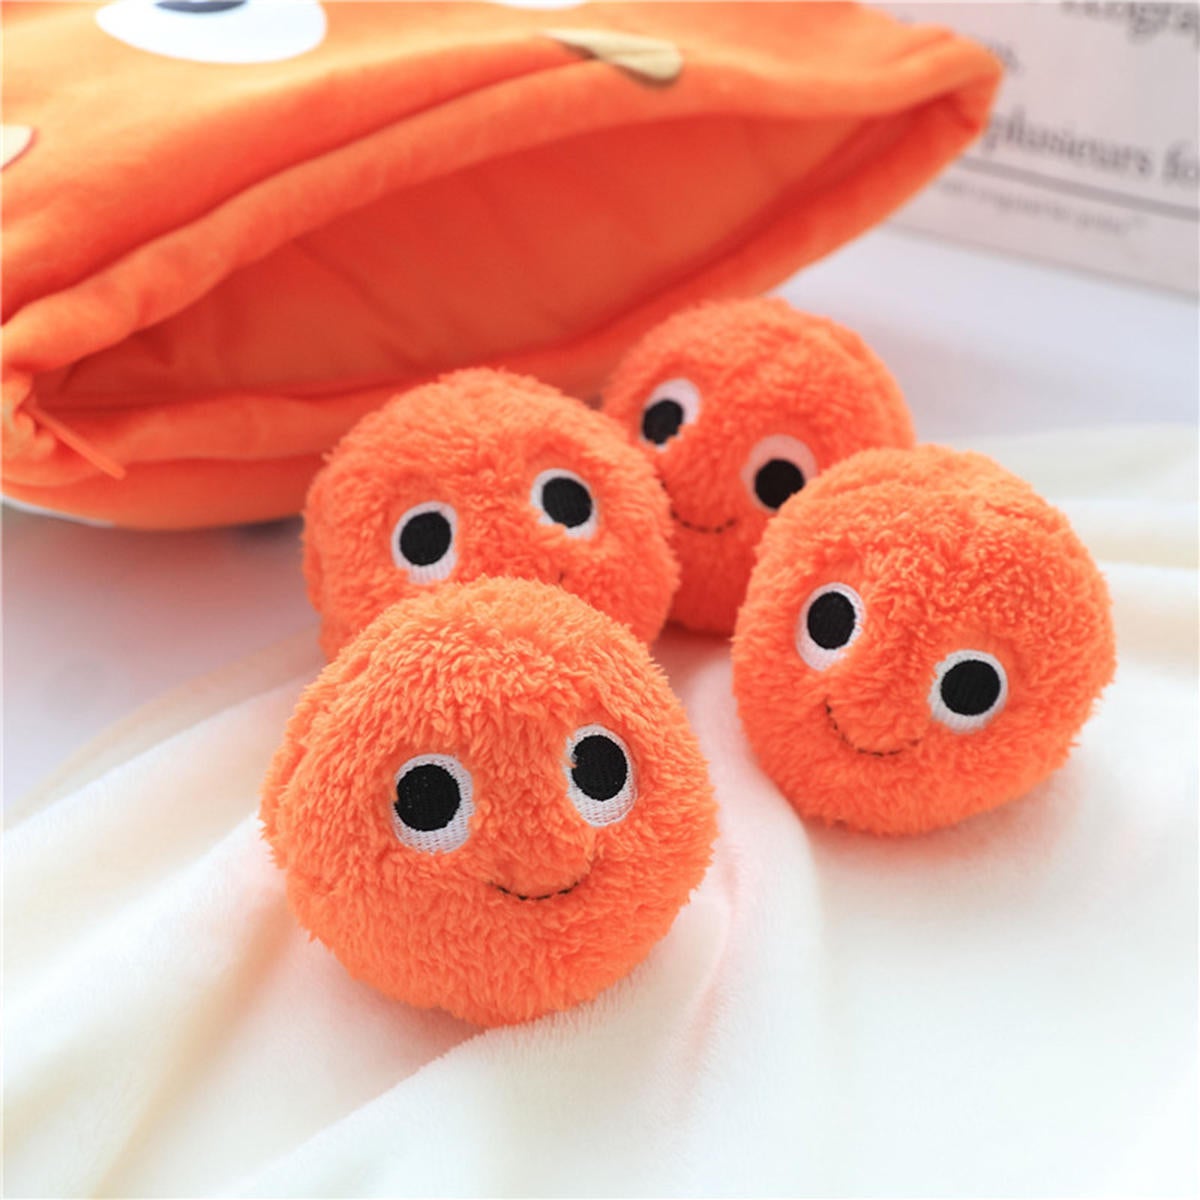 Orange Cheesy Stuffed Plush Soft Puffs Dolls Toy for Baby Gift